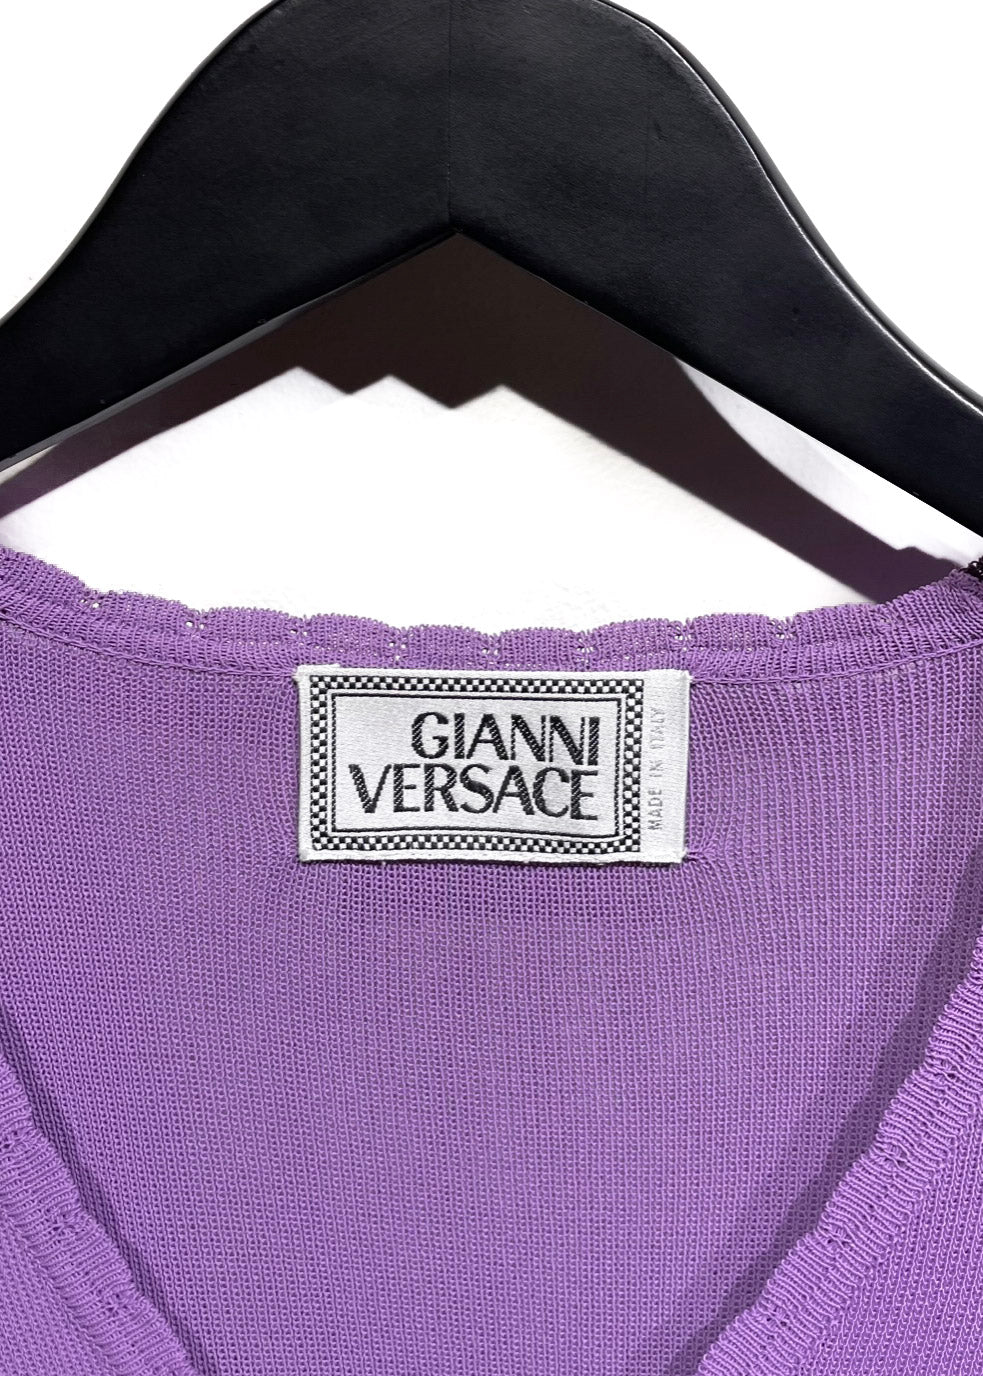 Gianni Versace Lilac Cardigan